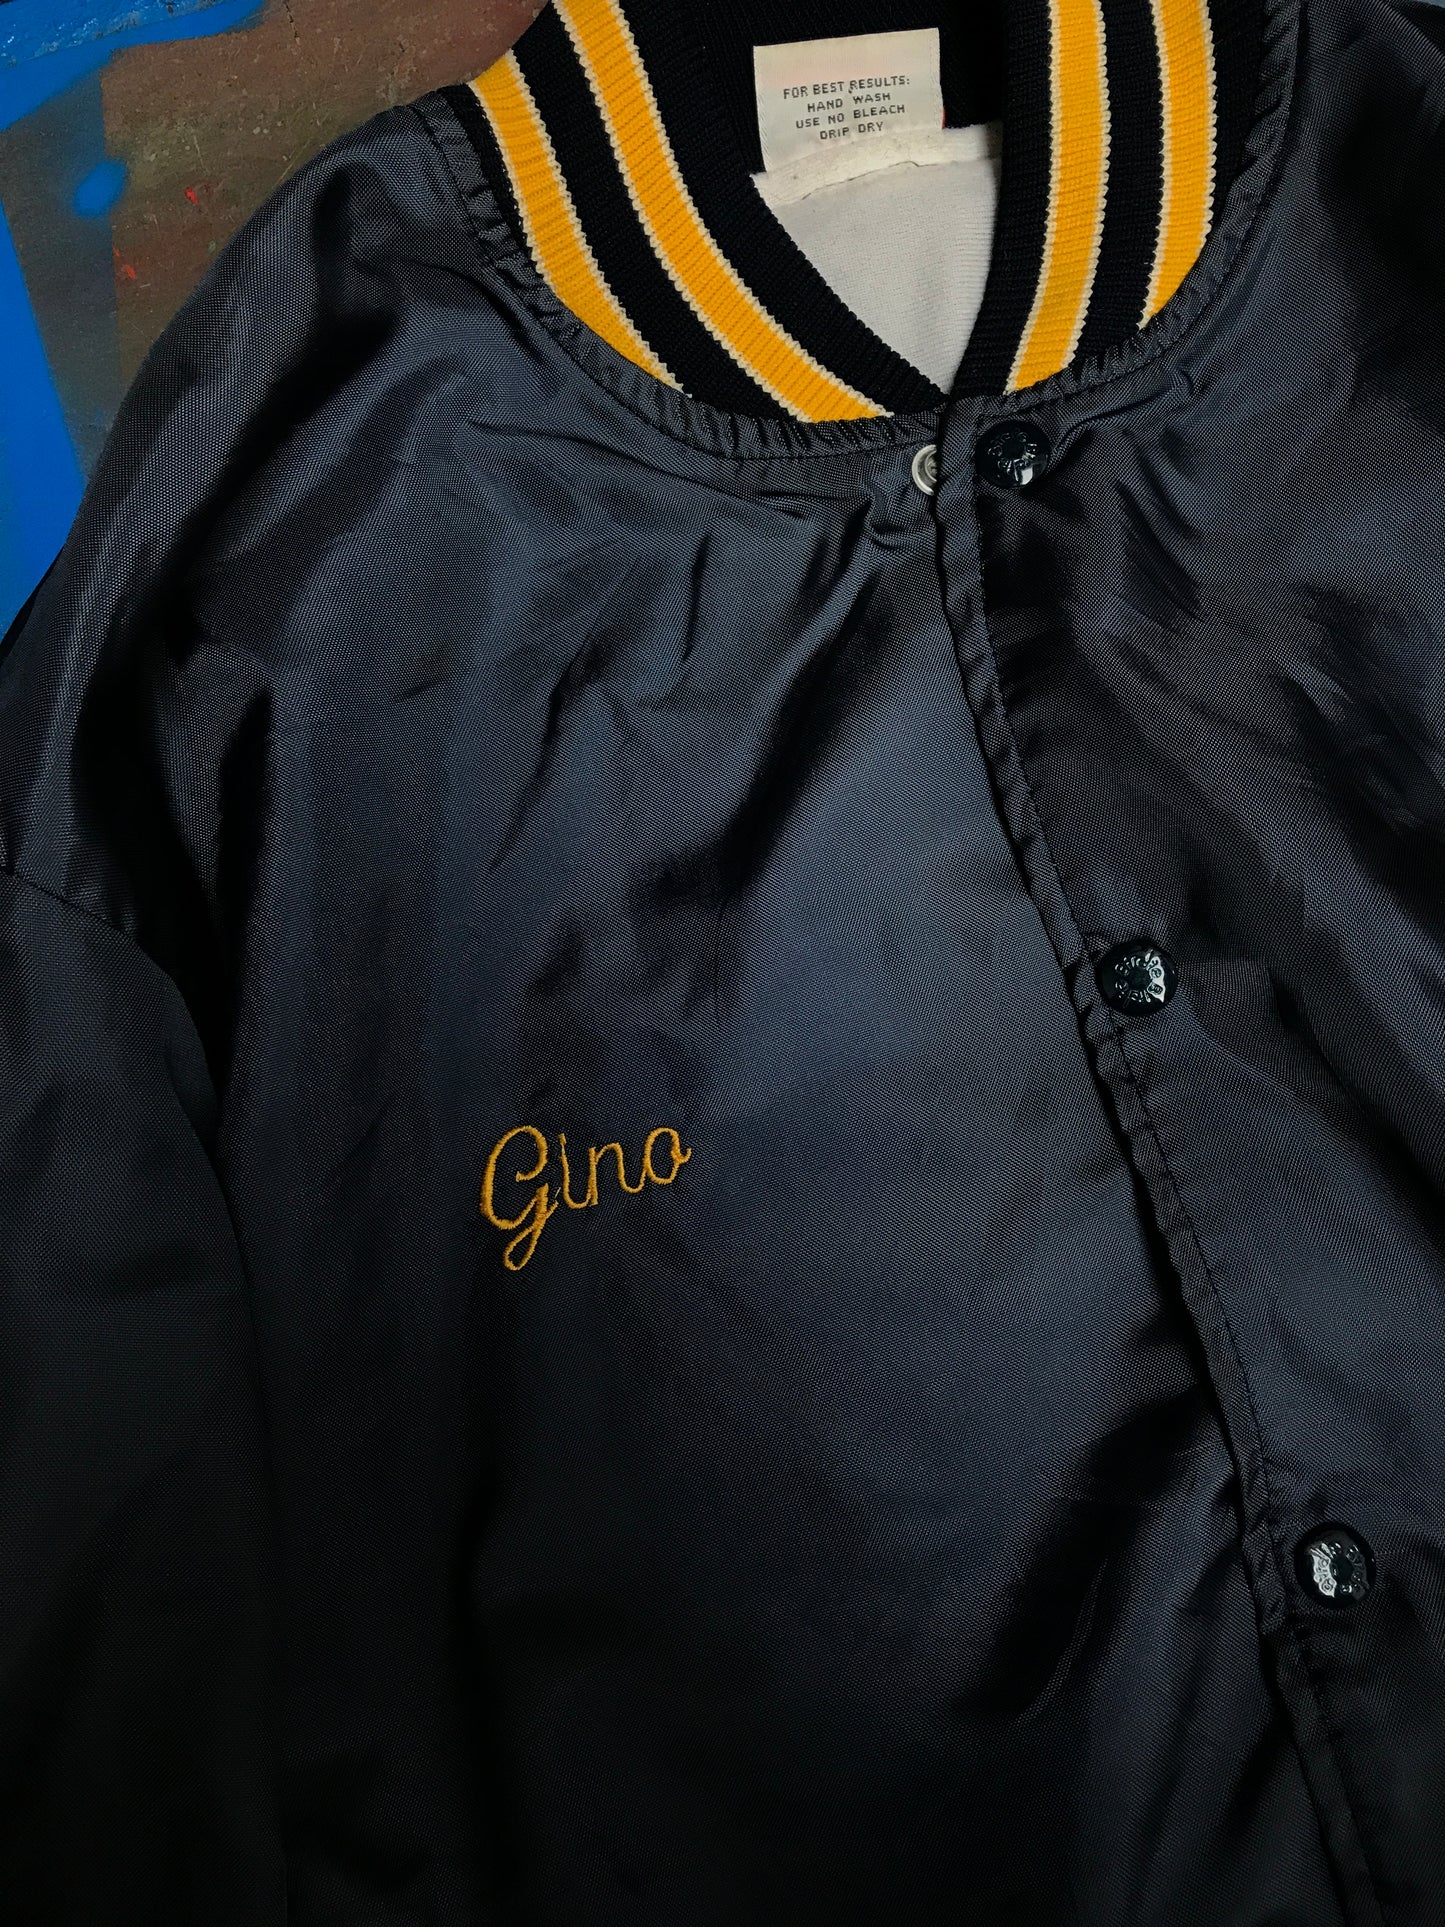 Vintage Gina jacket